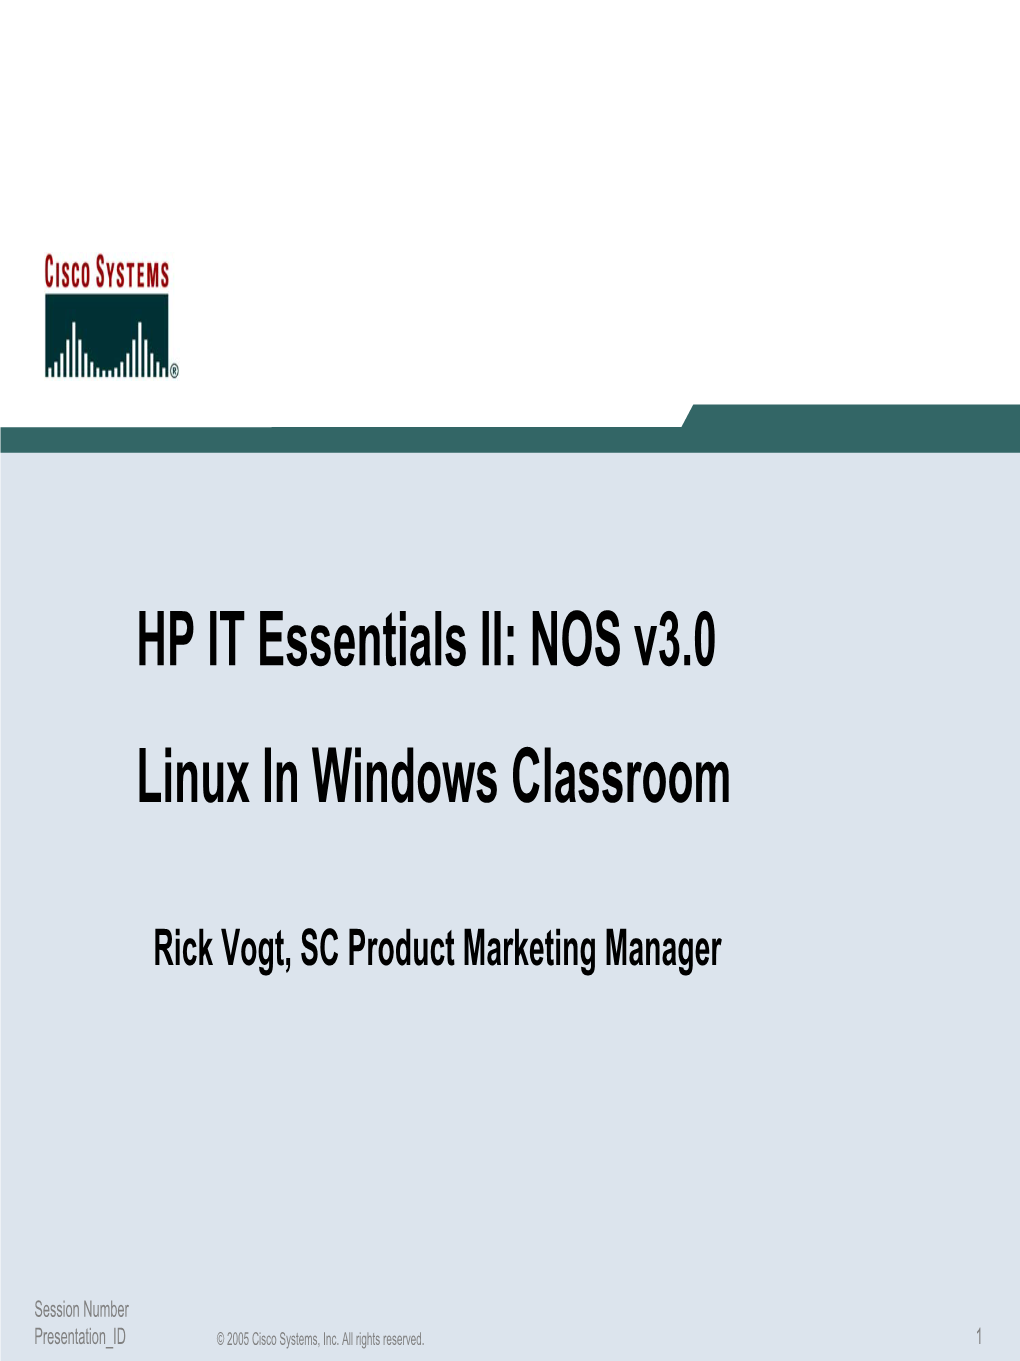 HP IT Essentials II: NOS V3.0 Linux in Windows Classroom